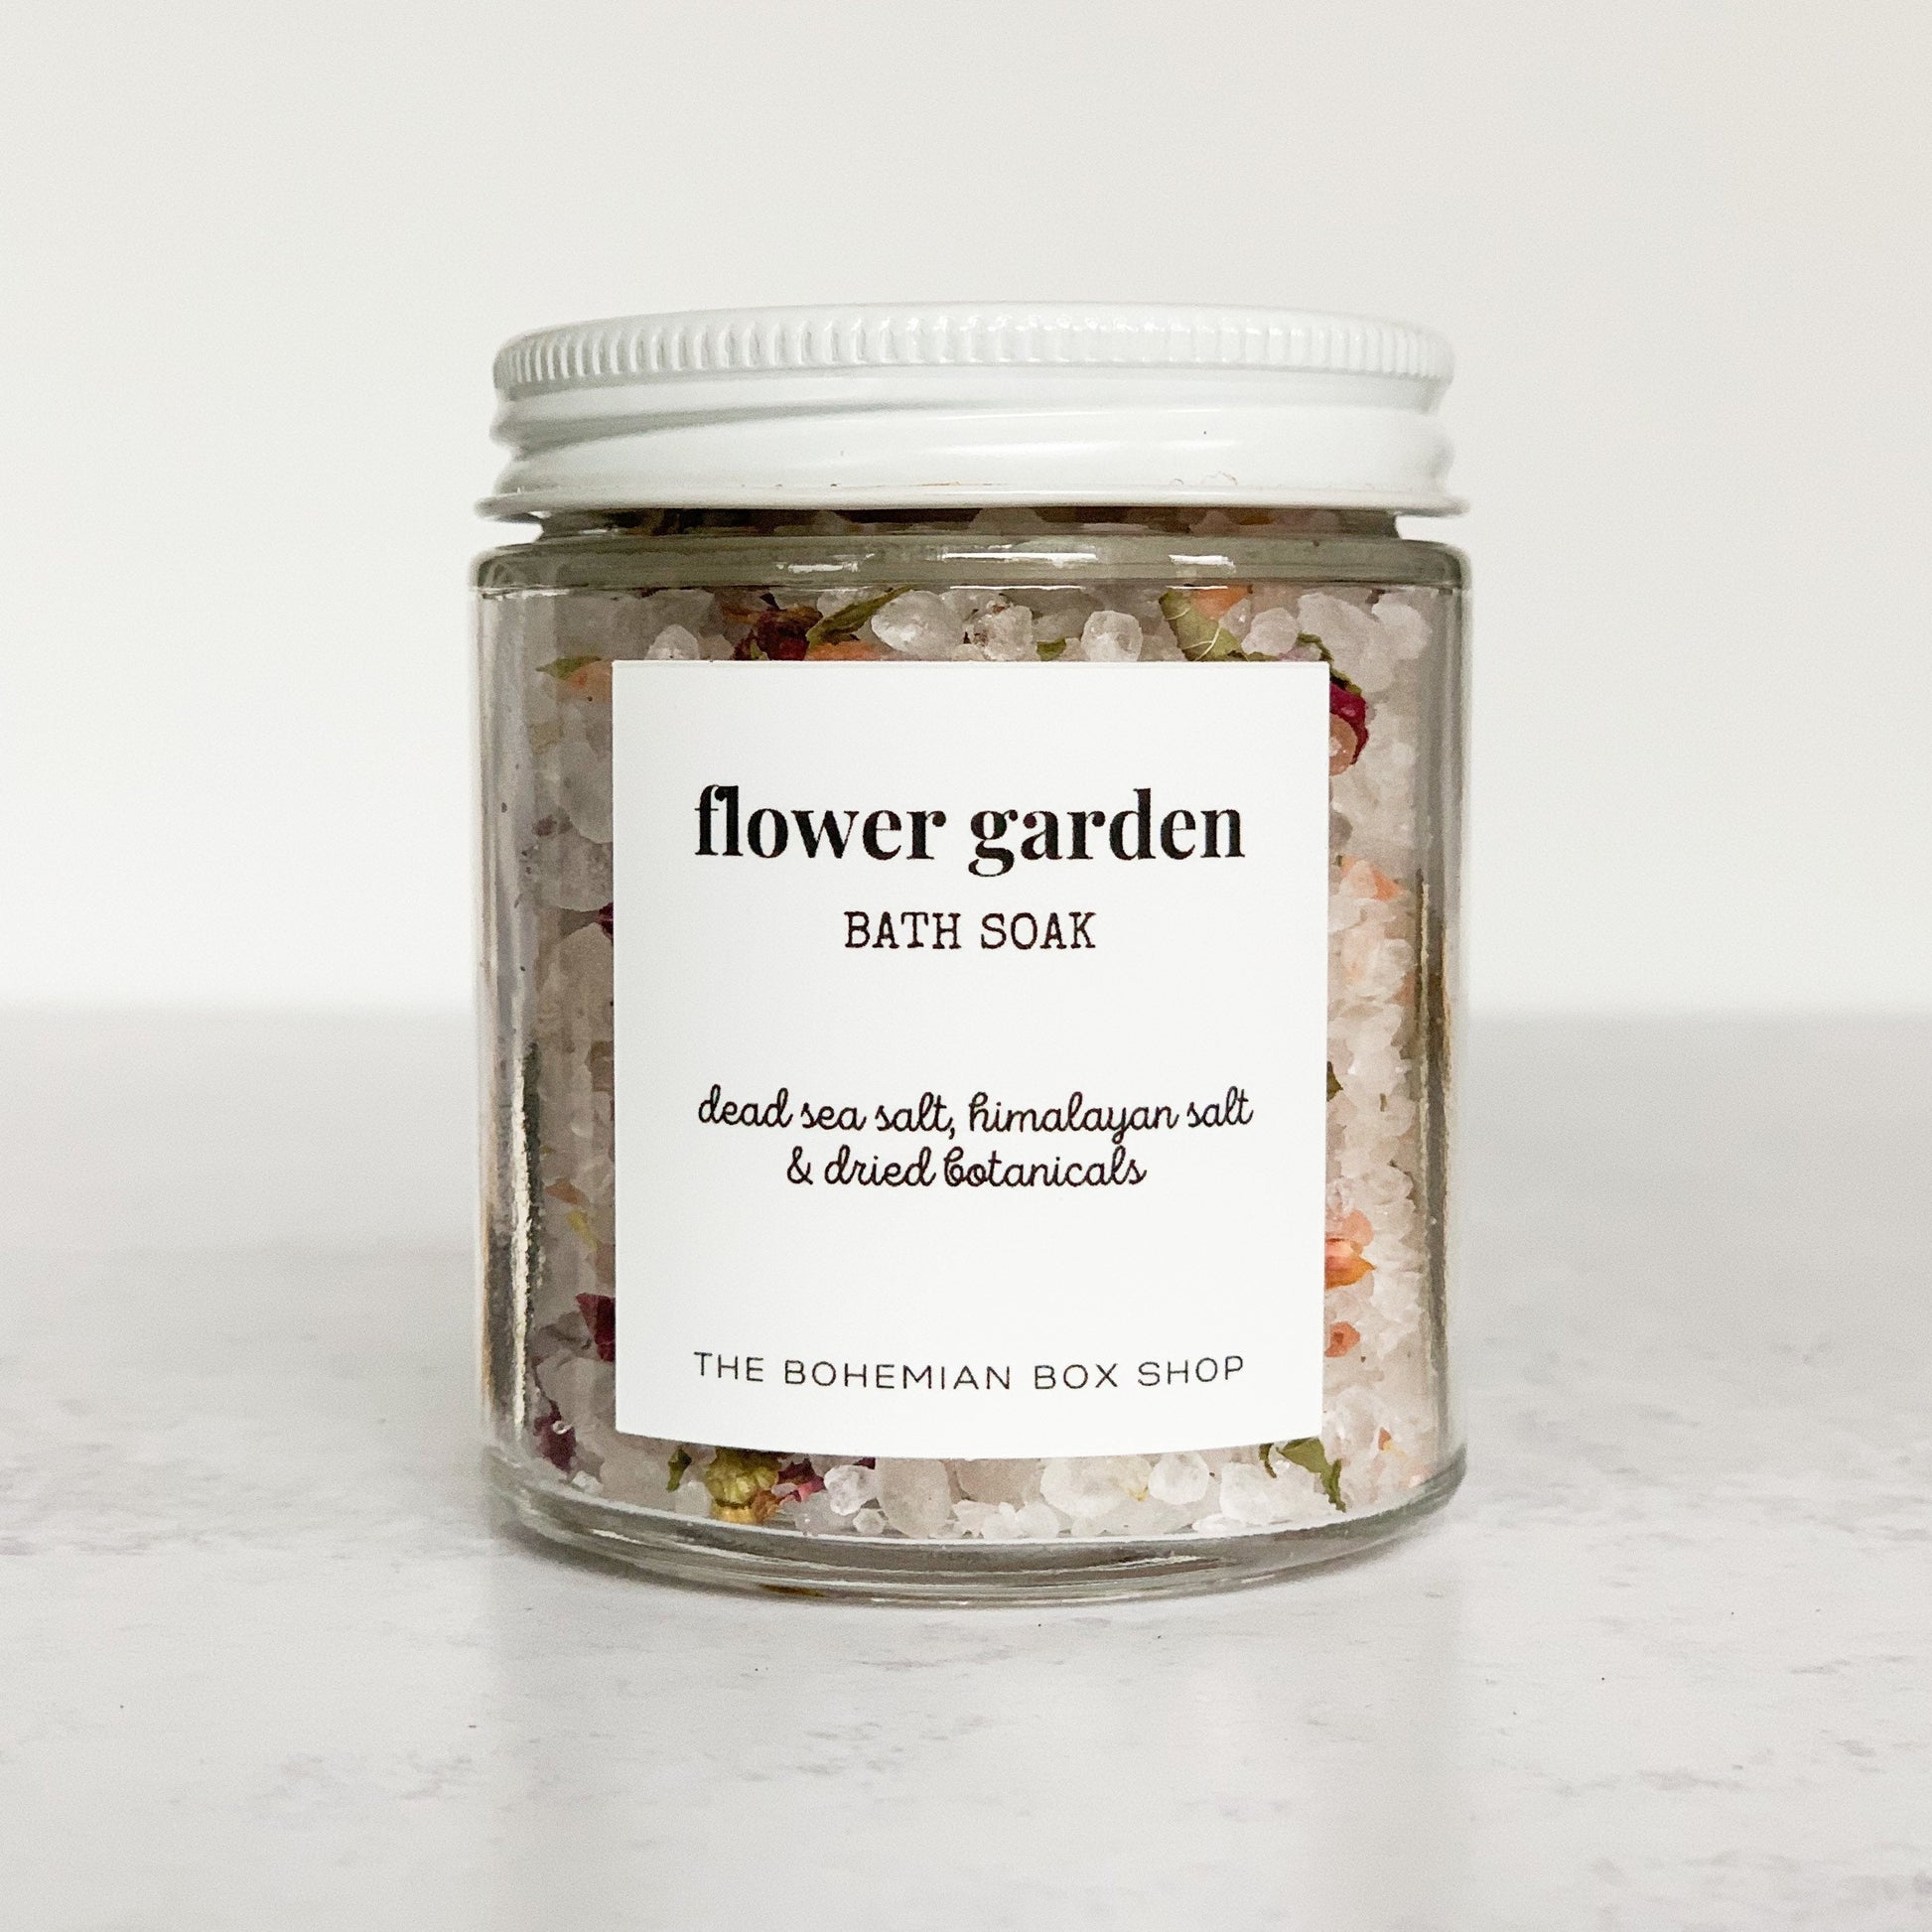 flower garden bath soak in a clear jar with white lid